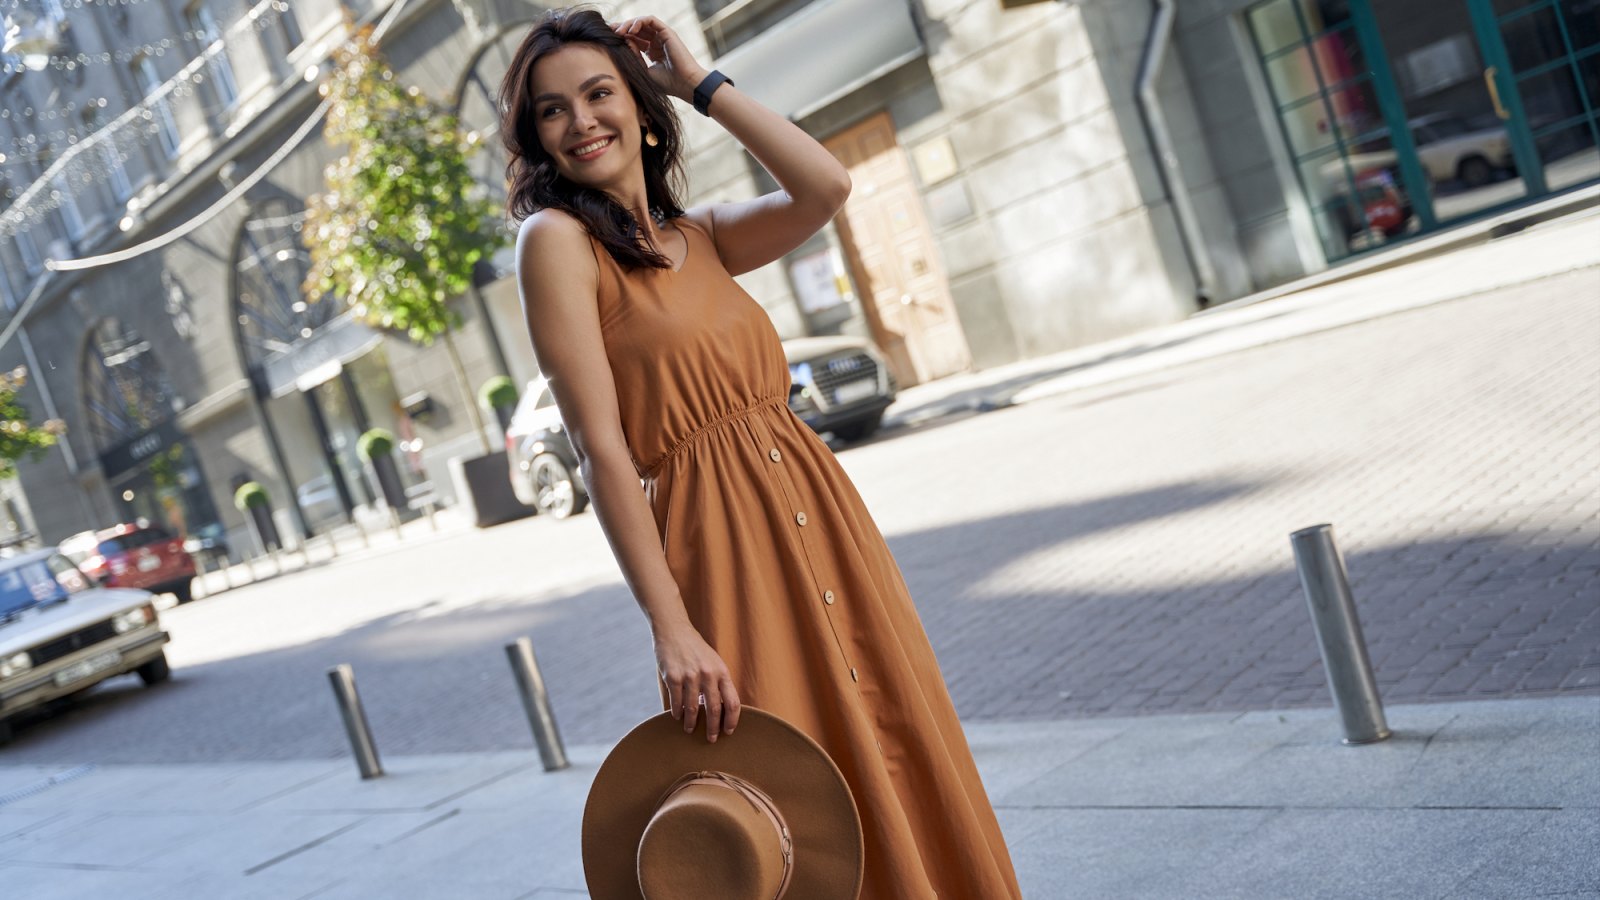 Woman-Wearing-Summer-Sundress-Stock-Photo